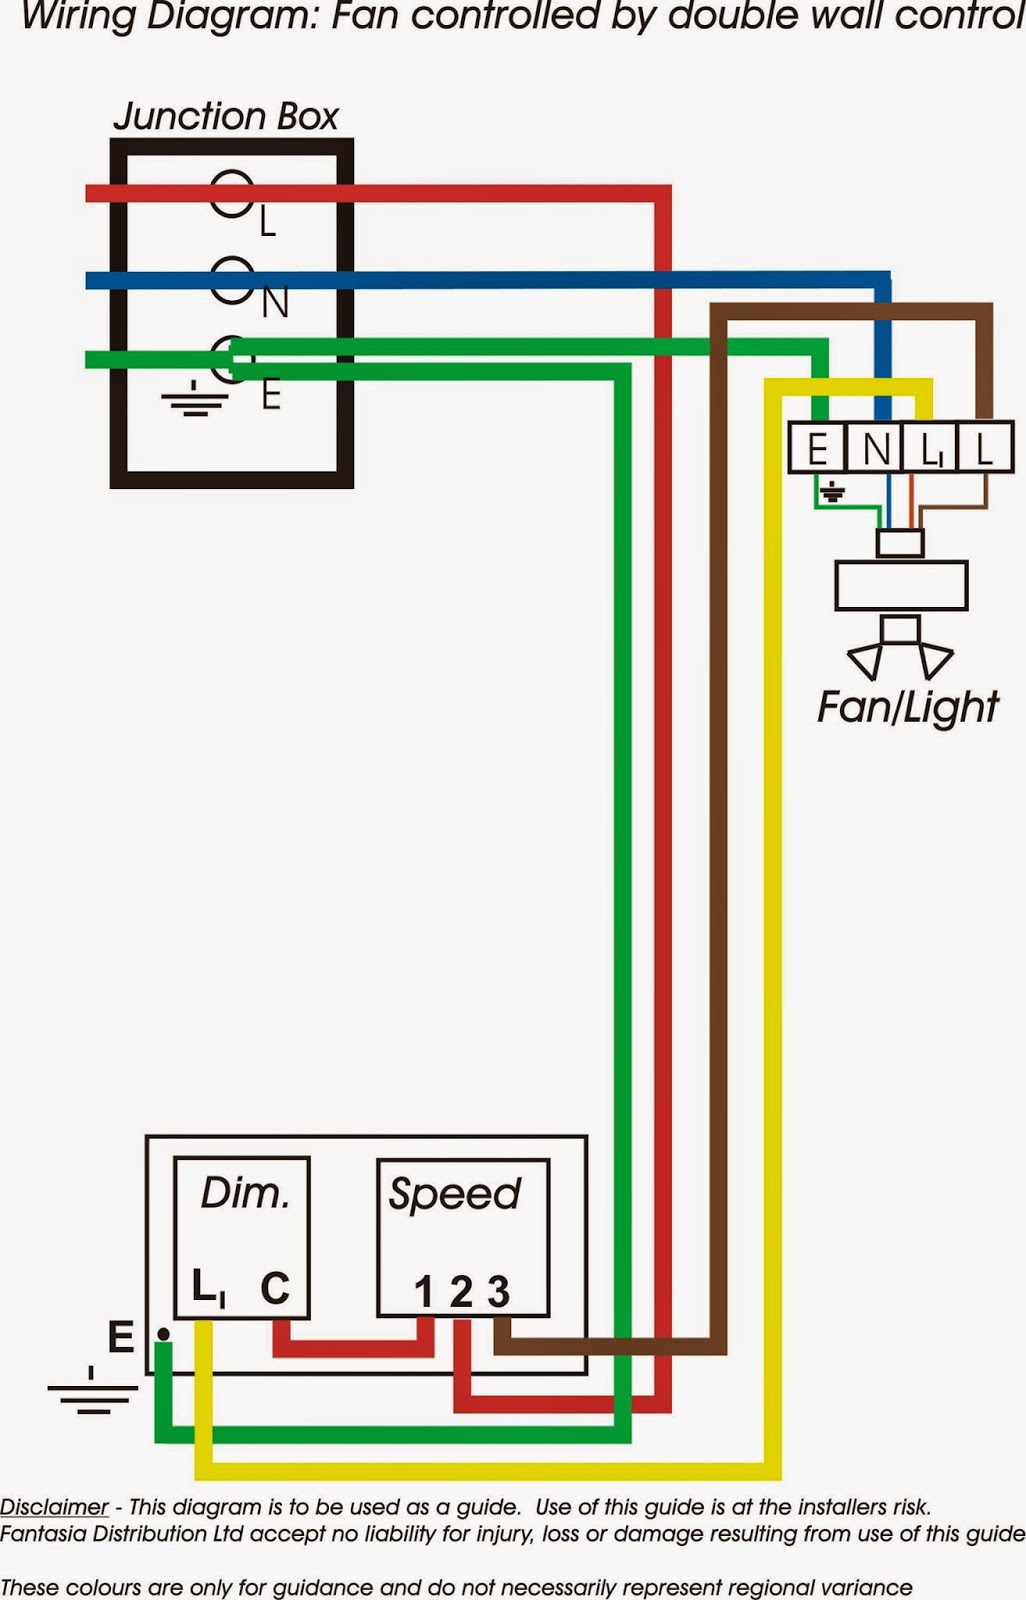 Electric Work Wiring diagram